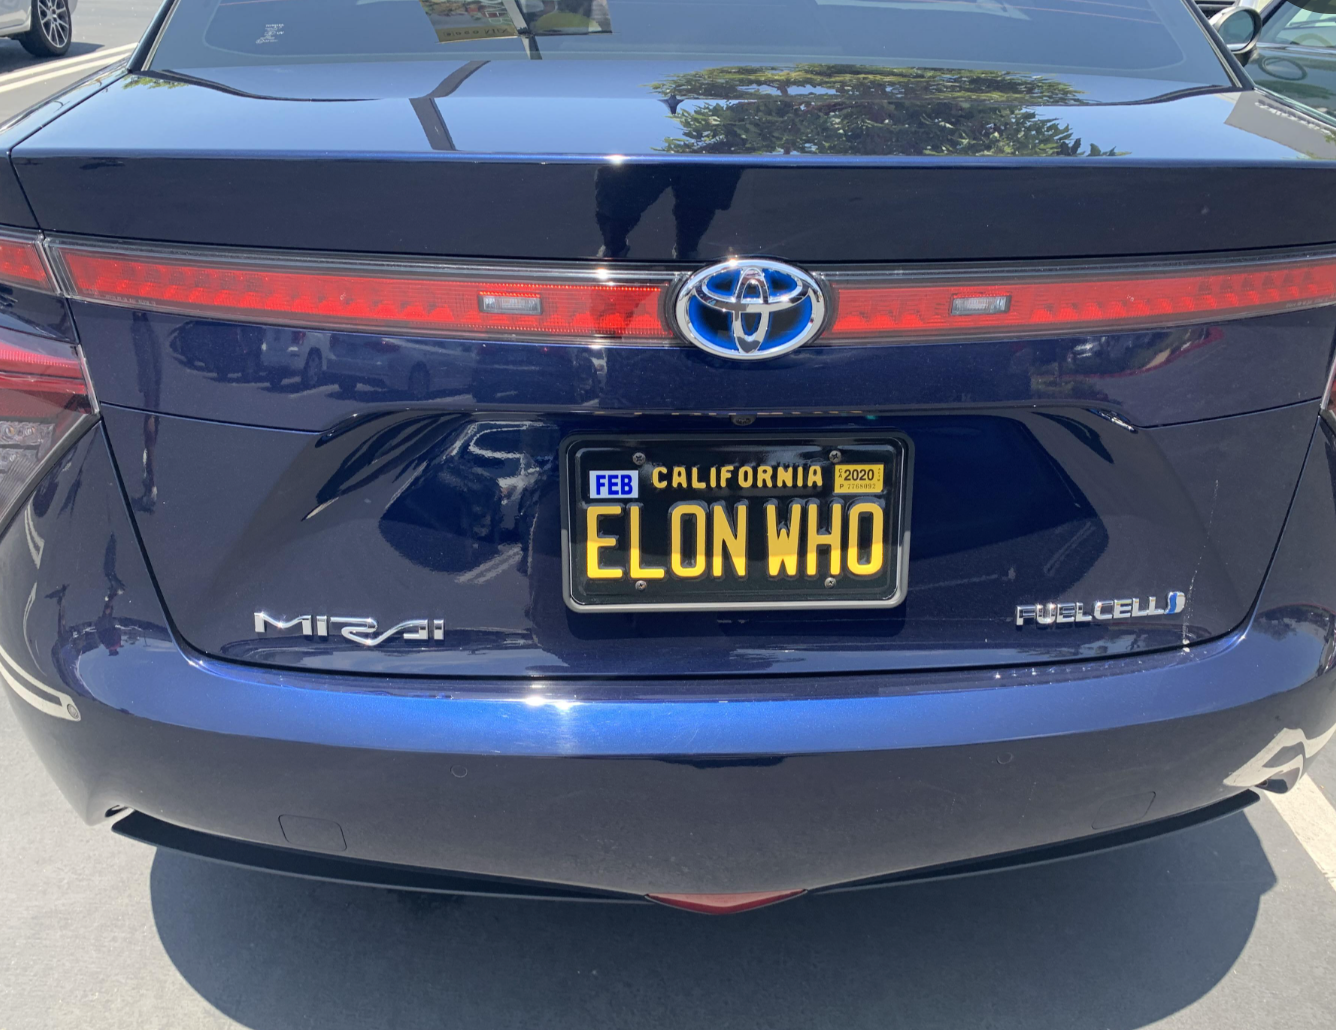 lexus is - Exc Misi Feb California 2020 Elon Who Fuel Cells